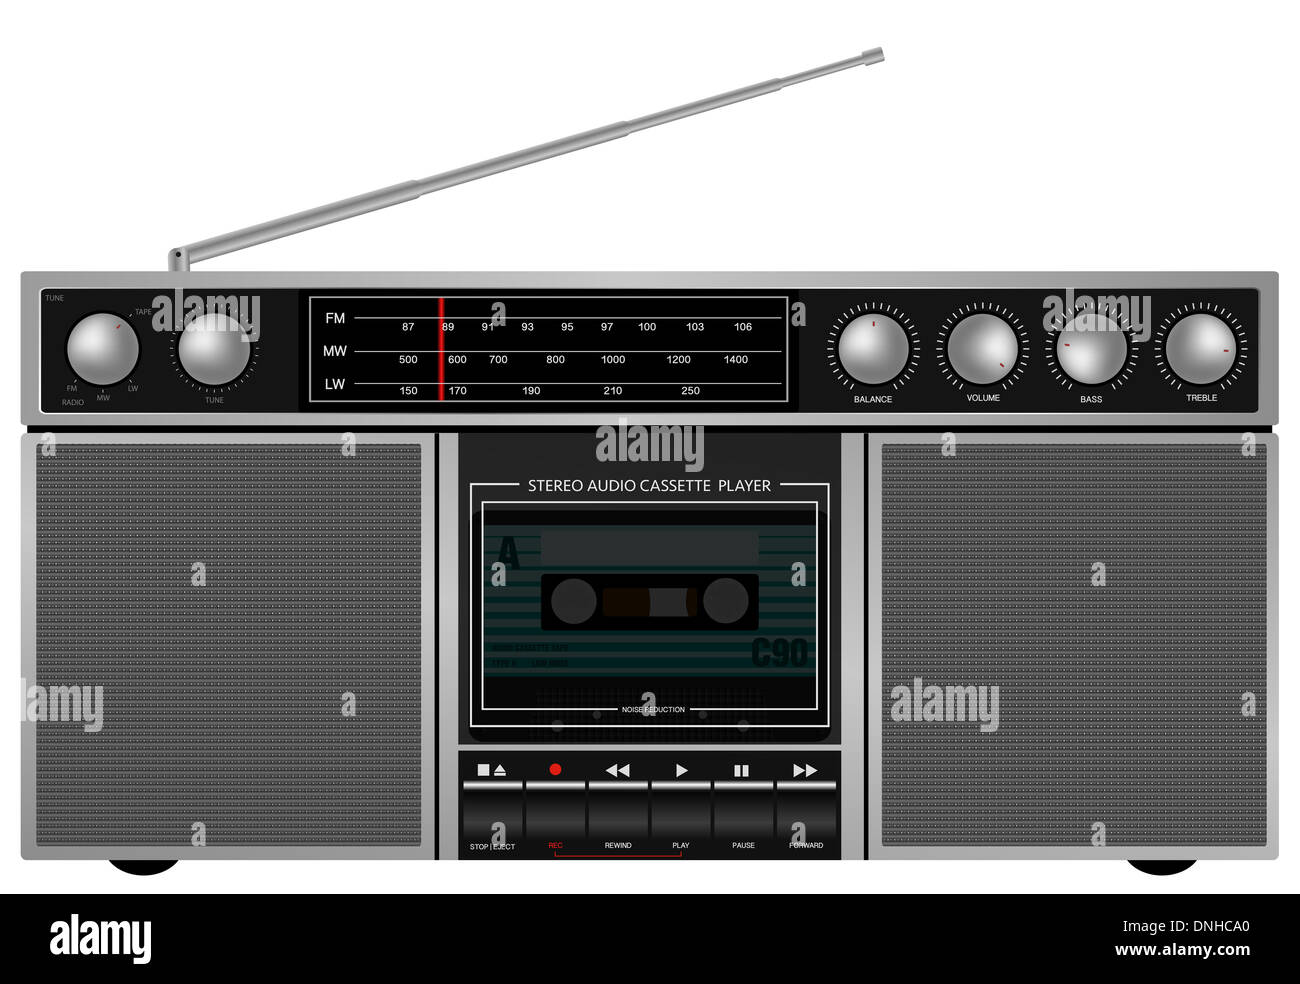 Illustration of Portable Retro Stereo Audio Cassette Player / Recorder Stock Photo